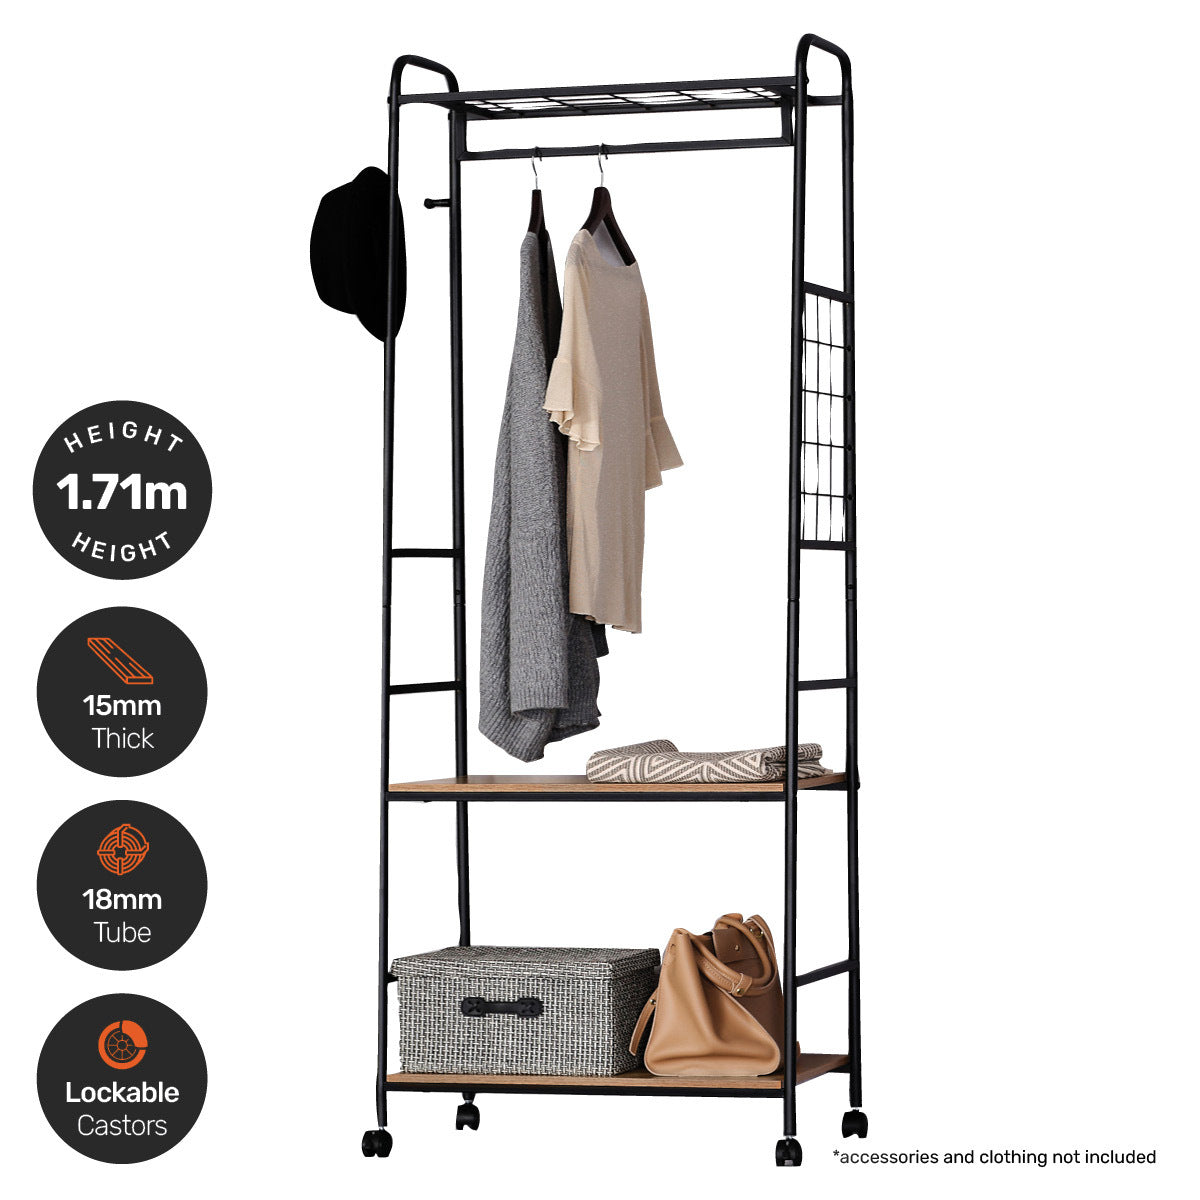 Home Master Garment Rack & Shelving 2 Tier Sleek Stylish Modern Design 1.71m Deals499